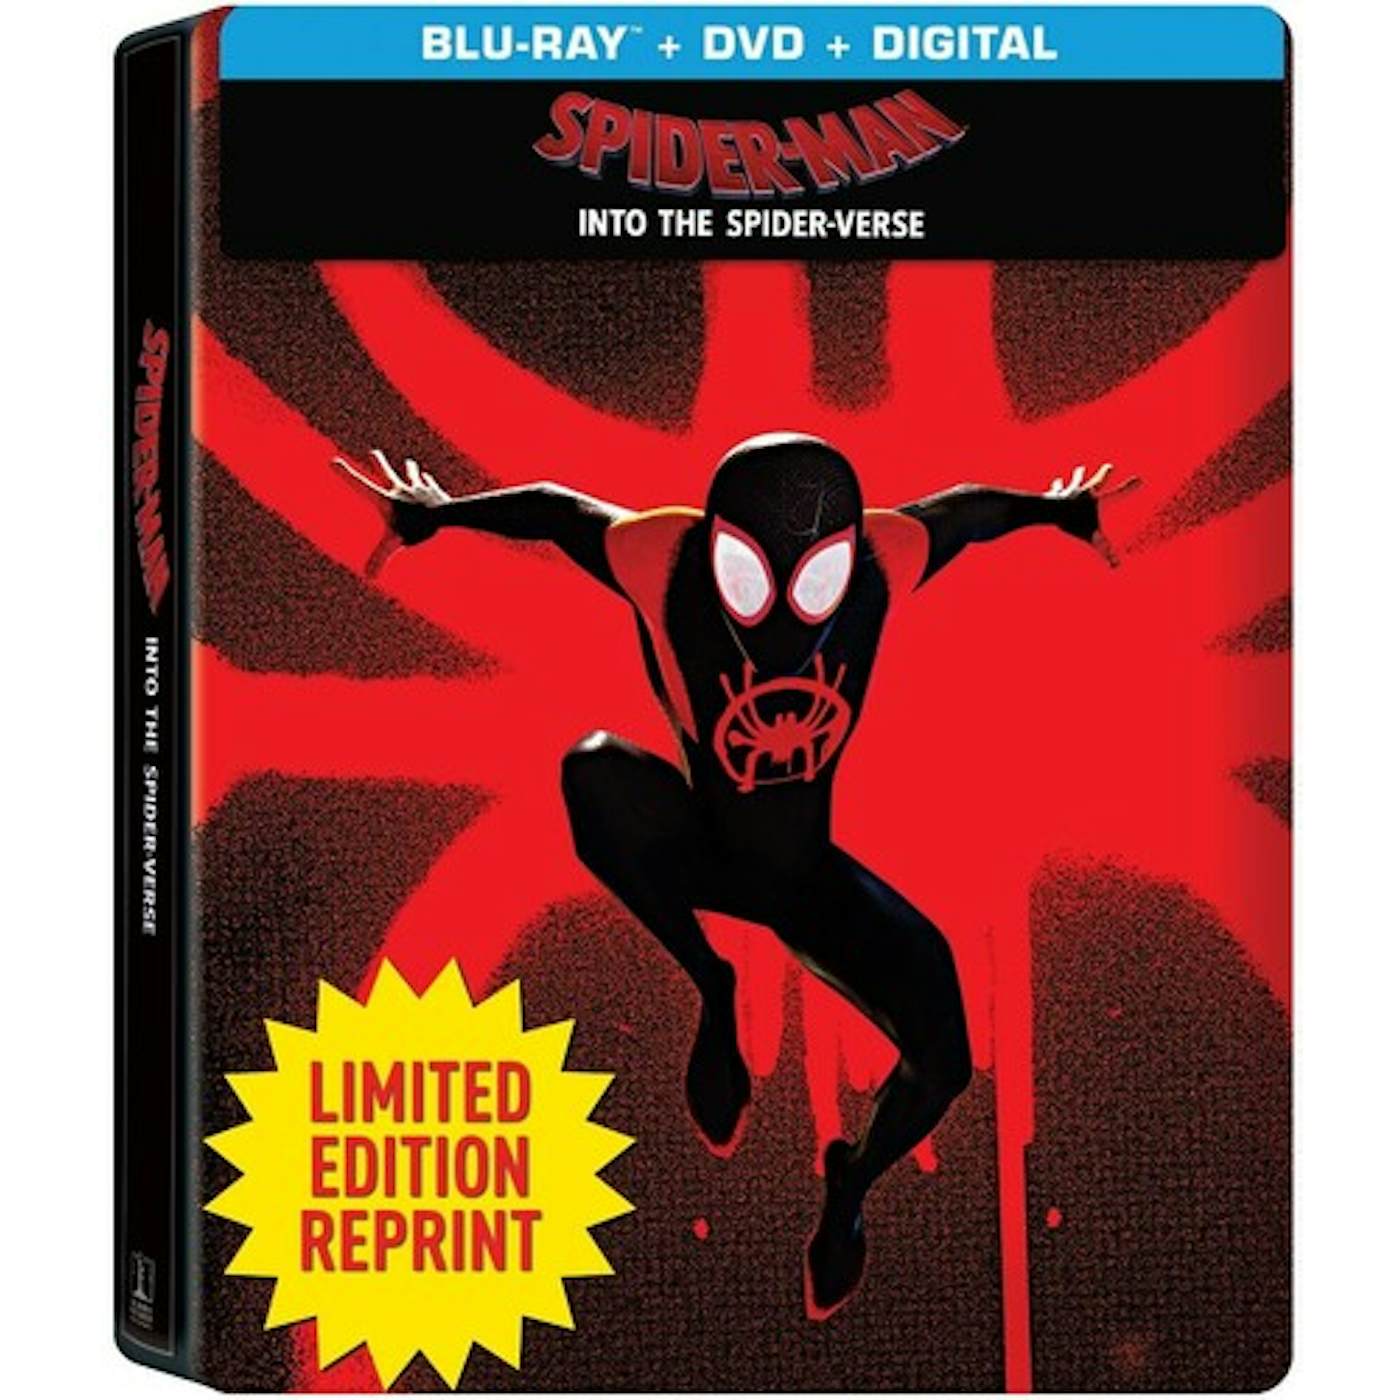 SPIDER-MAN: INTO THE SPIDER-VERSE Blu-ray